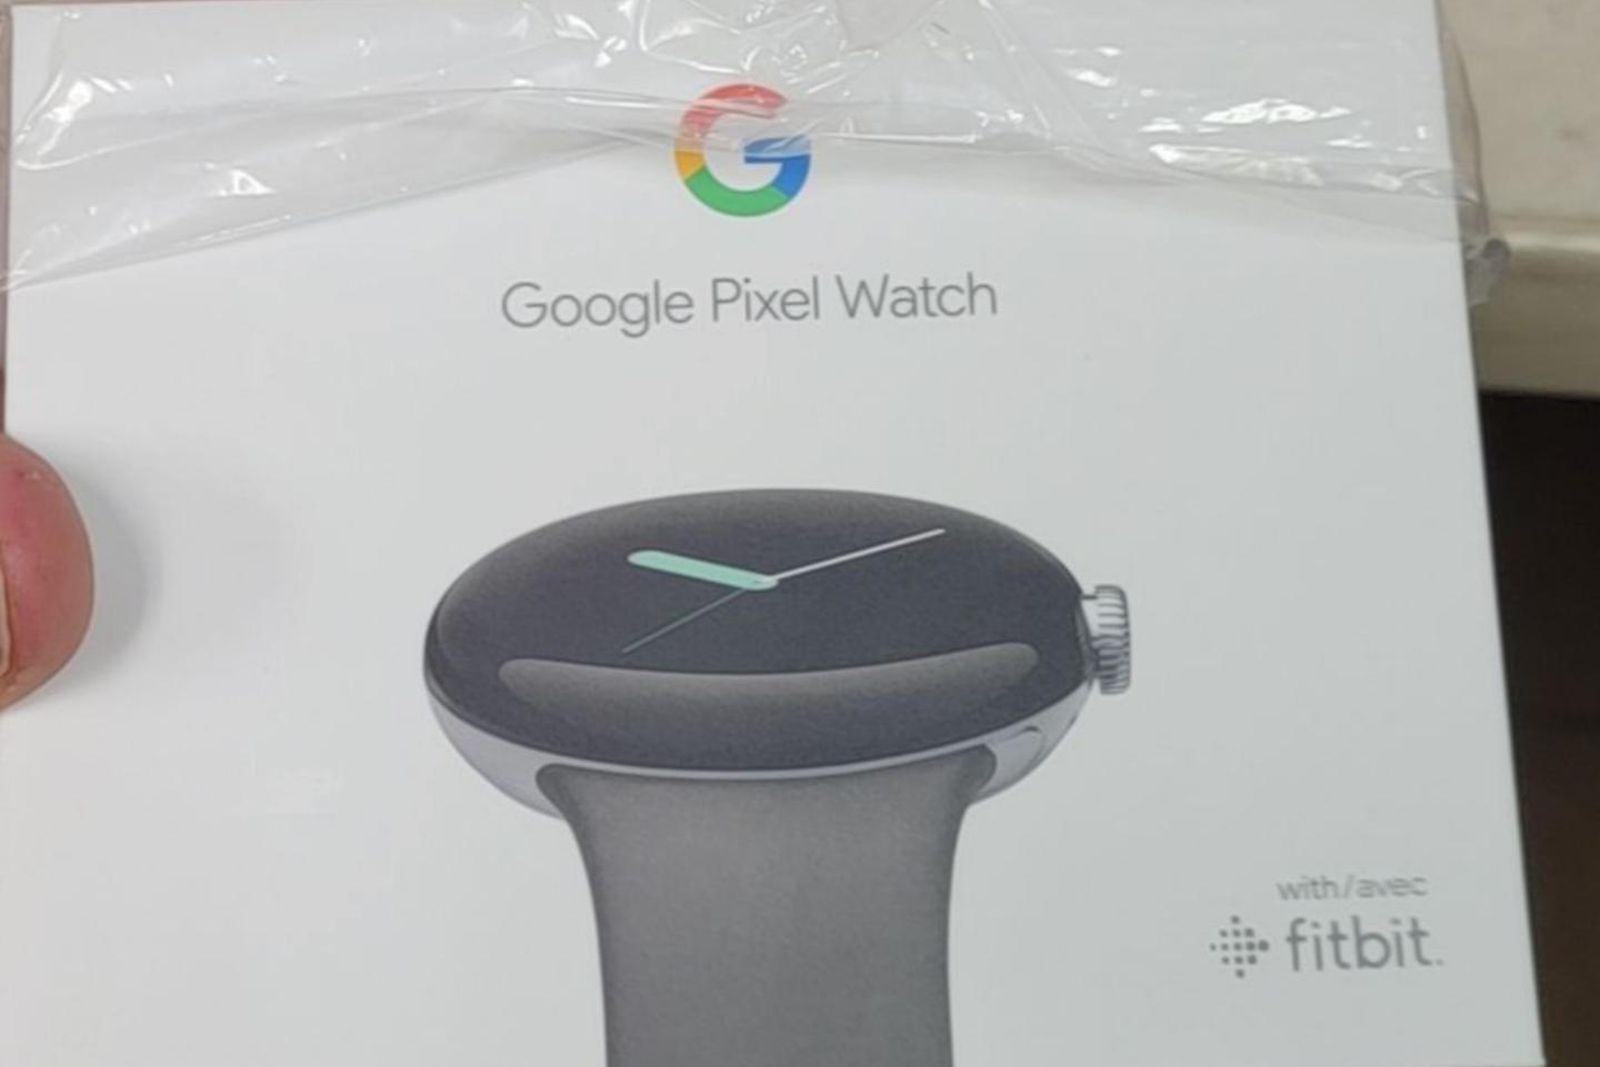 Google Pixel Watch box pic photo 1